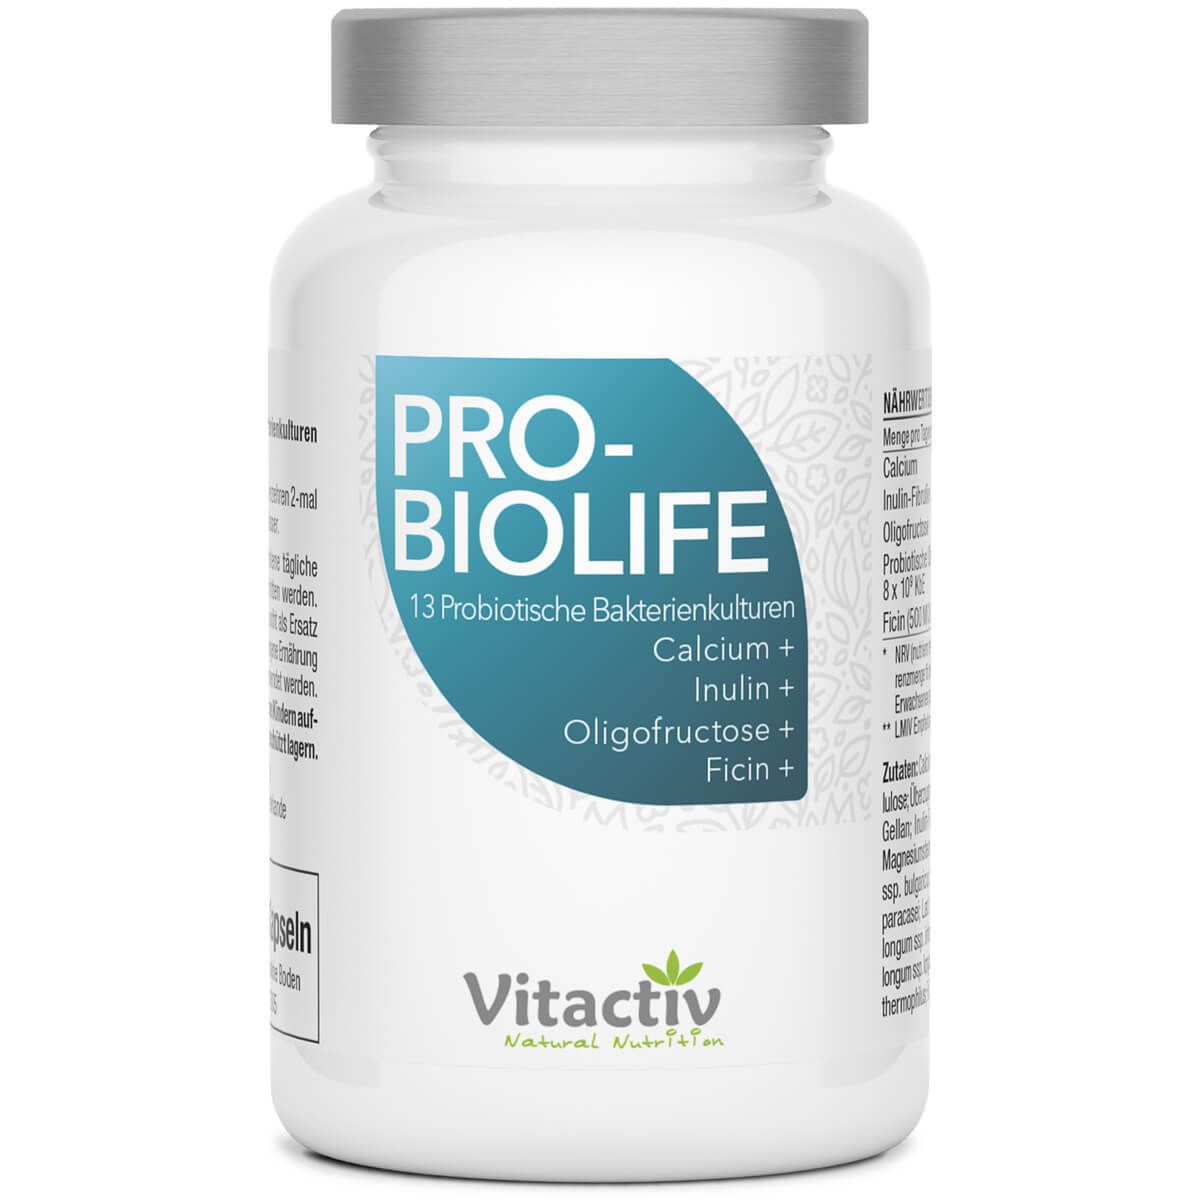 Vitactiv Probiolife Probiotika